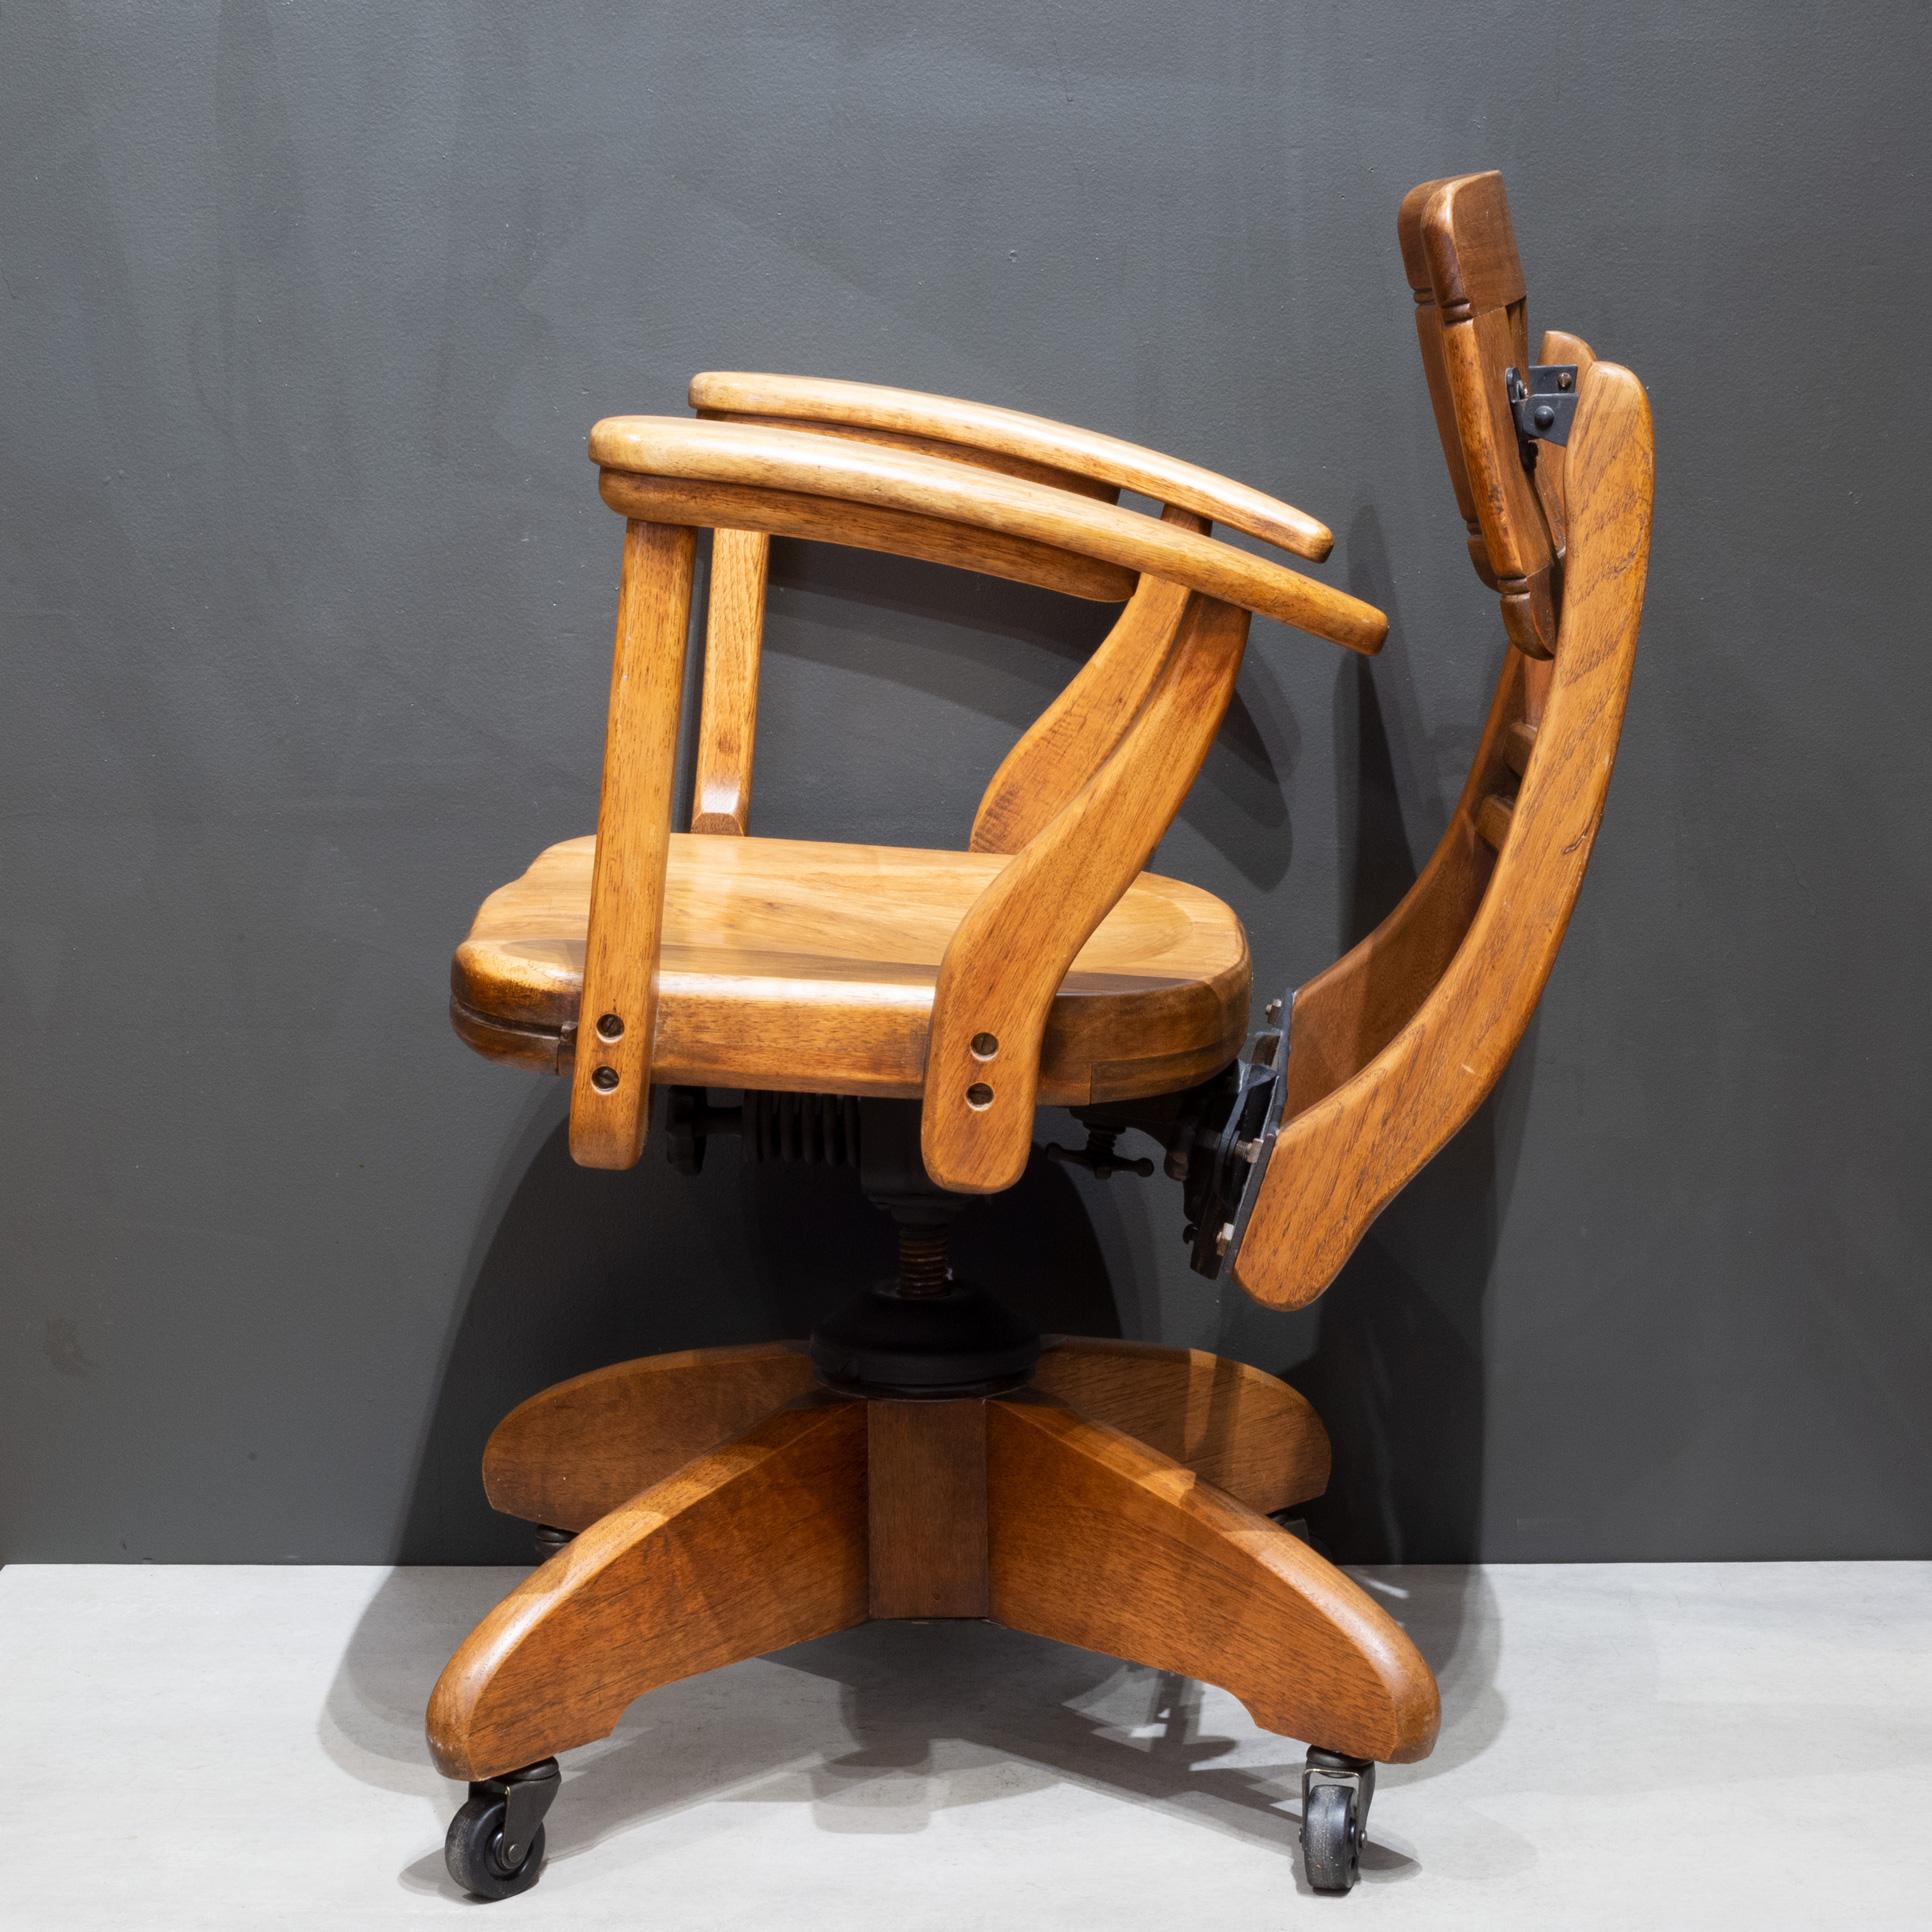 Cast Rare Antique Adjustable Swivel Oak Desk Chair with Floating Back Rest c.1926